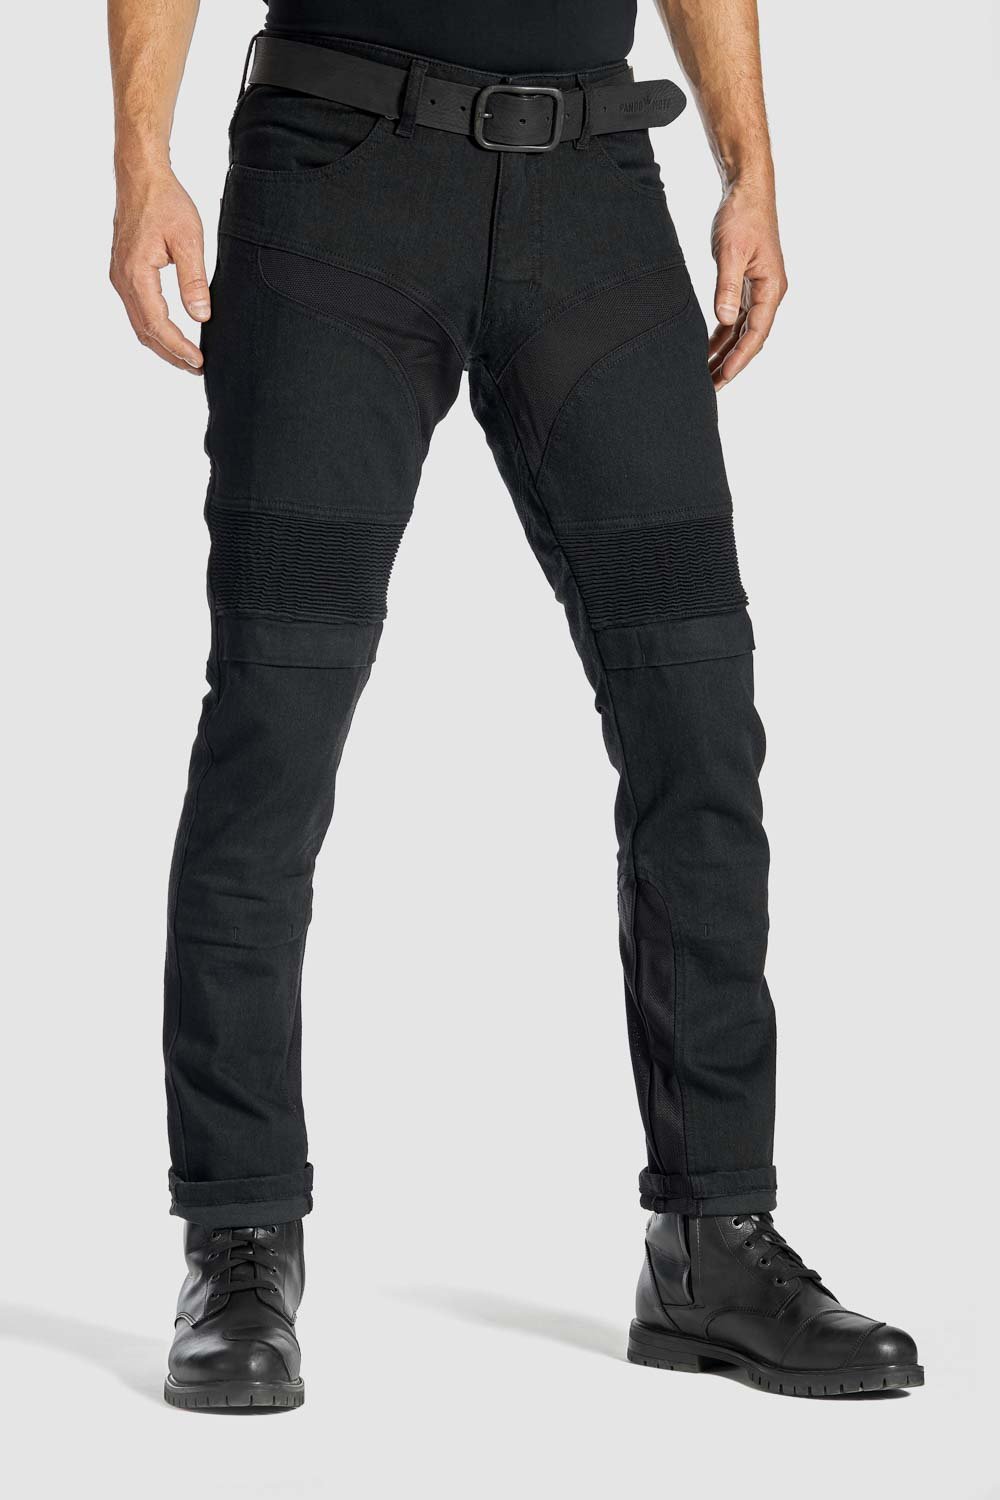 Pando Moto KARLDO KEV 01 Jeans